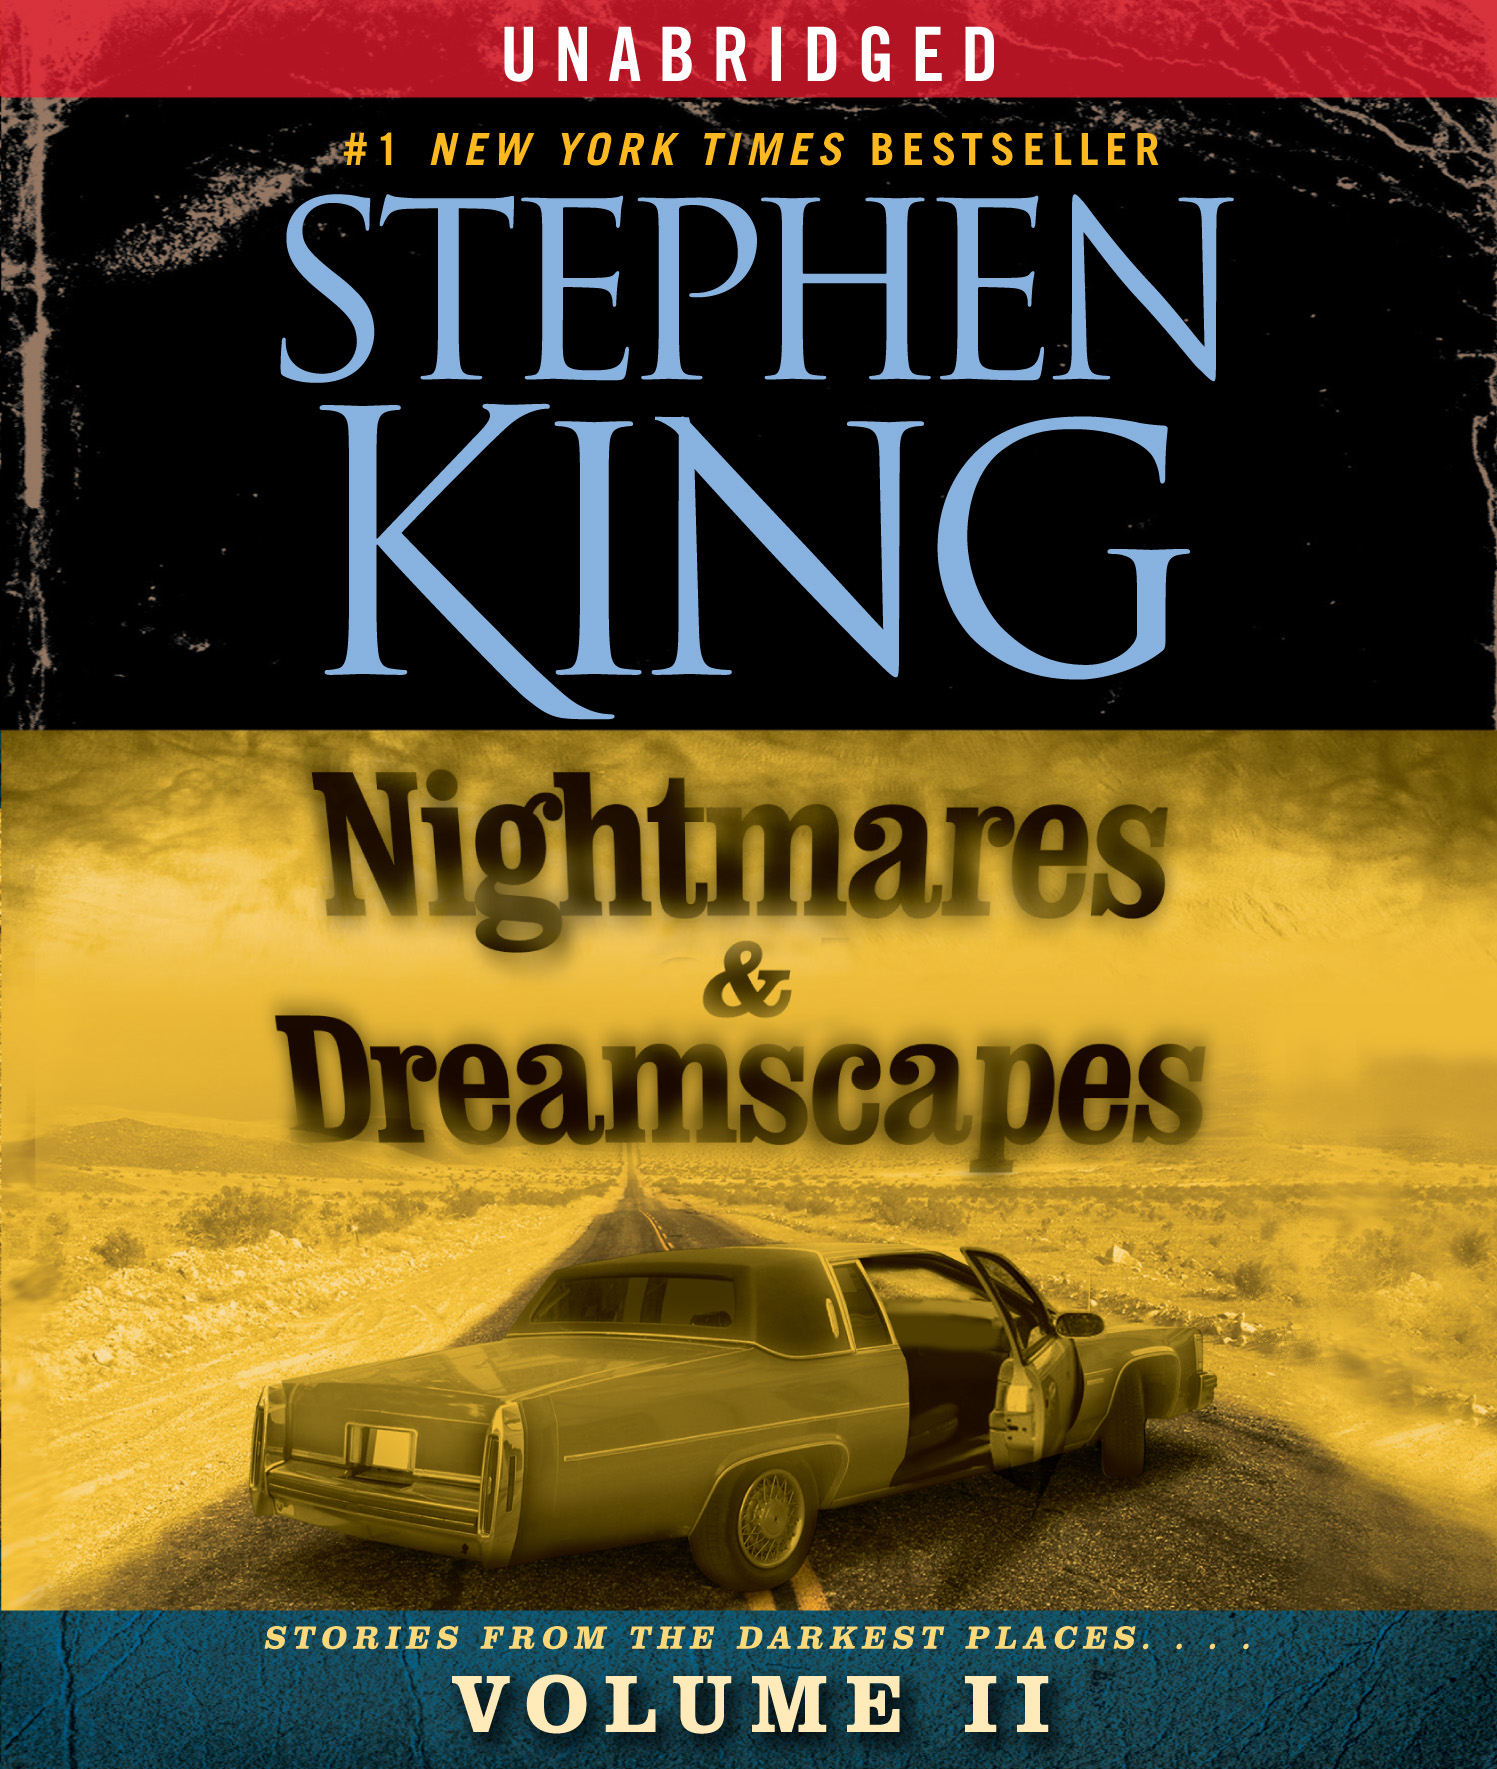 Are Stephen King Audiobooks in Multiple Volumes?